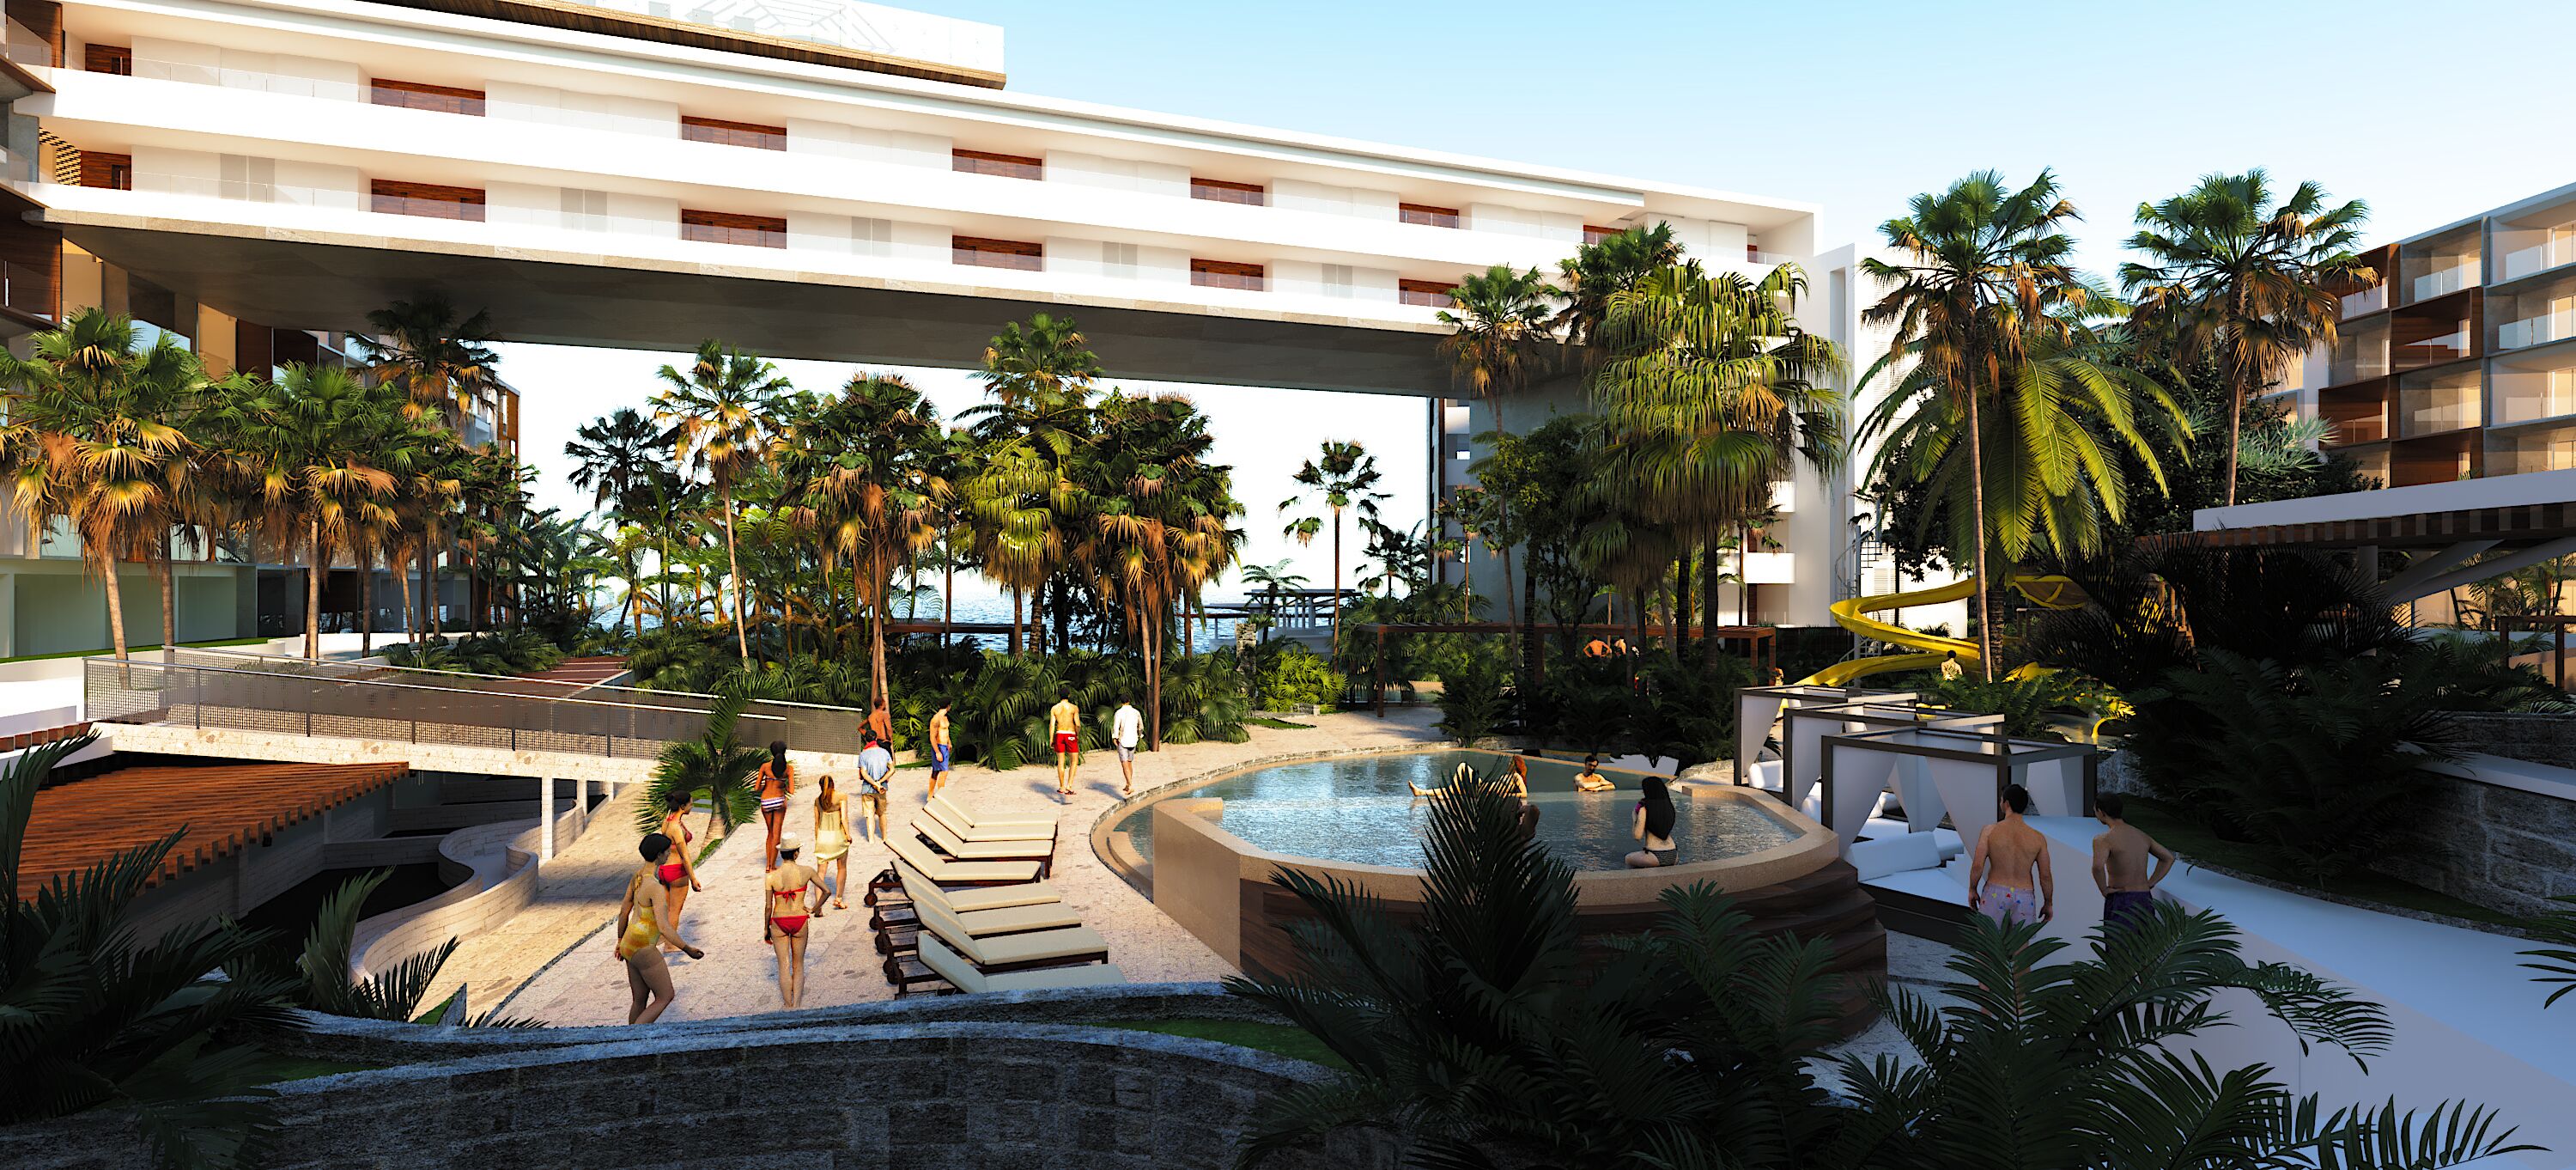 Sensira Resort & Spa - Riviera Maya